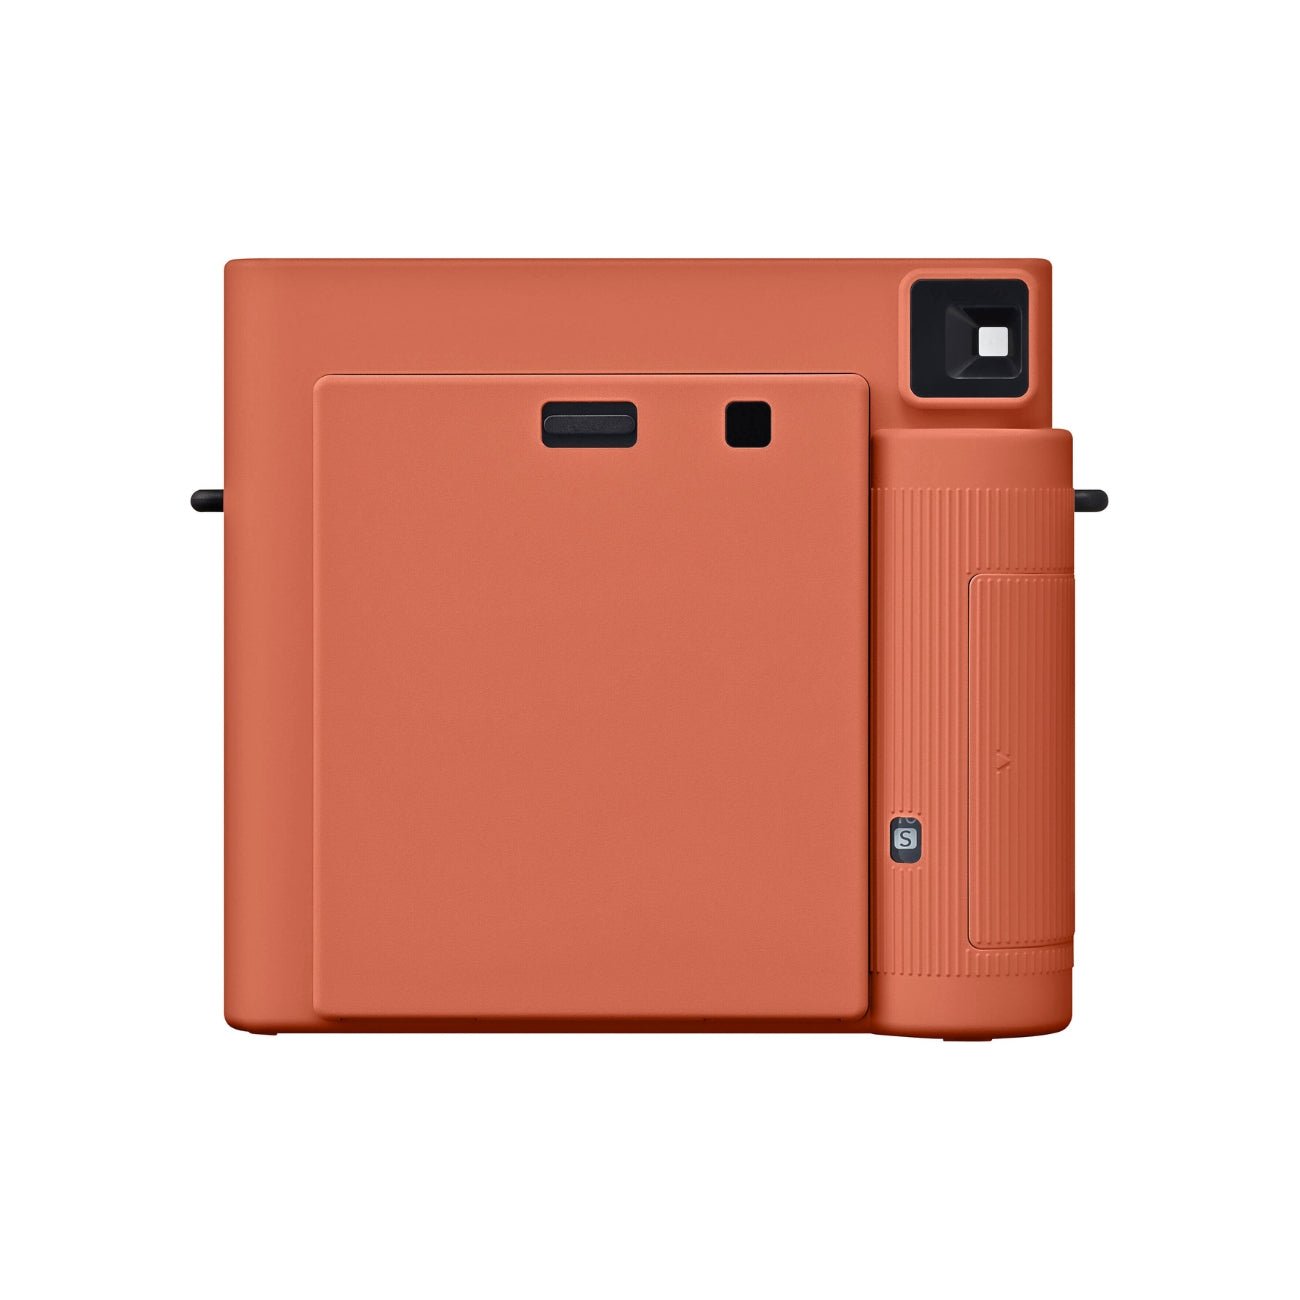 Fujifilm Instax SQUARE SQ1 Instant Film Camera Terracotta Orange Rear View